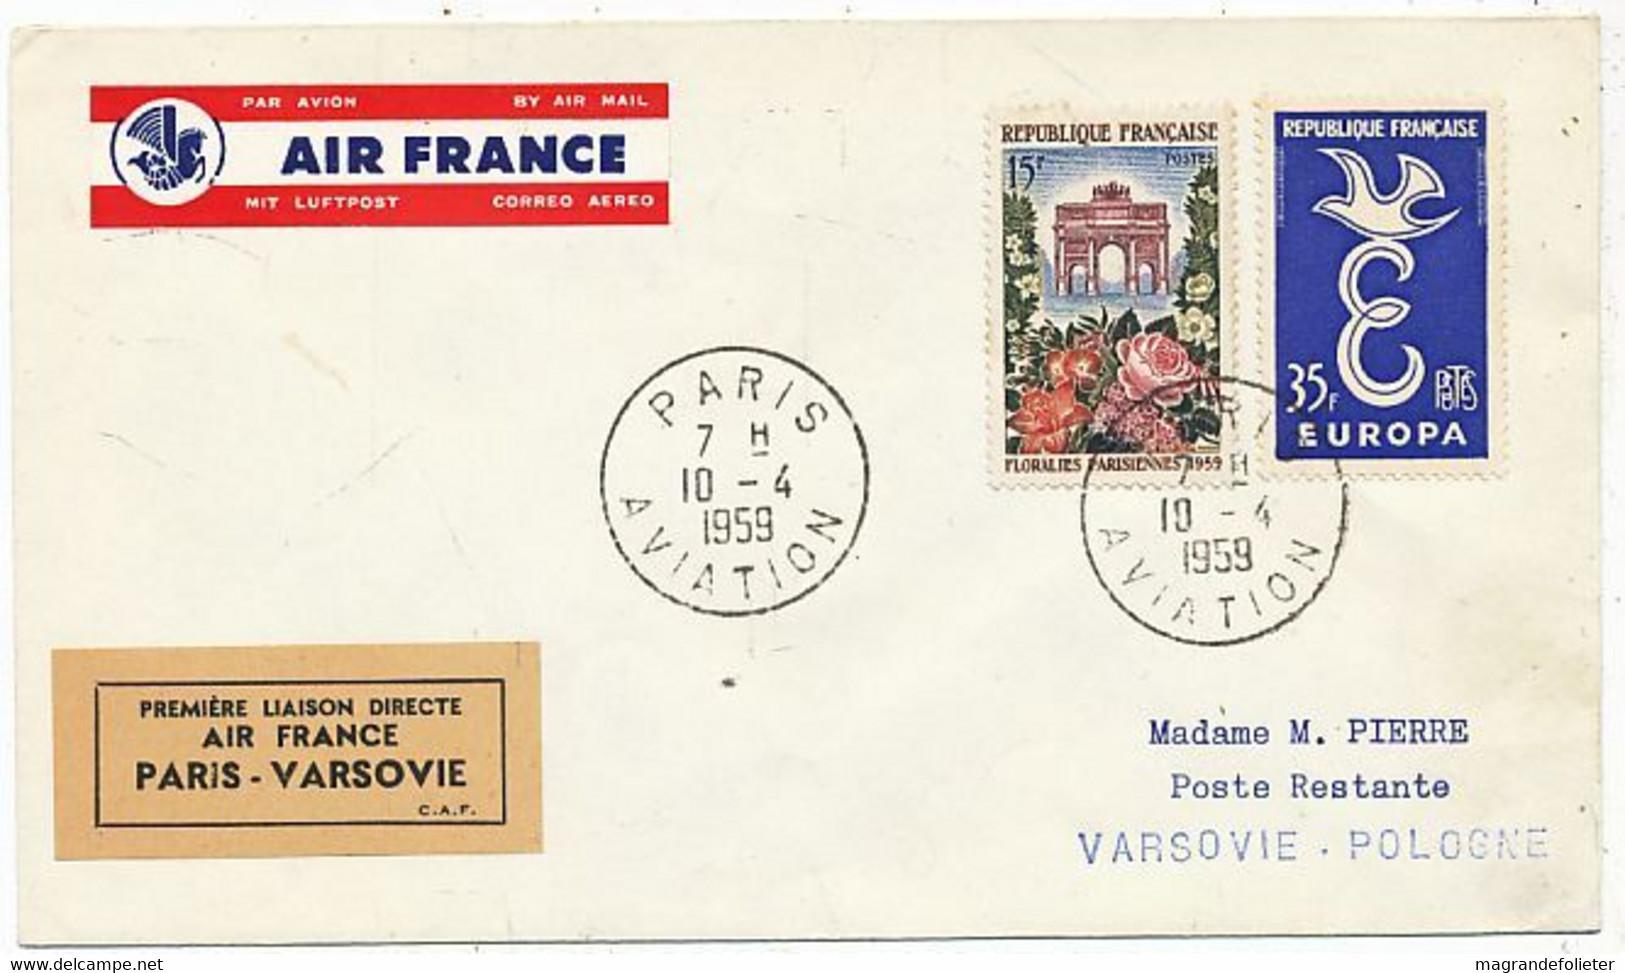 AVION AVIATION AIRLINE AIR FRANCE PREMIERE VOL DIRECT PARIS-VARSOVIE 1959 - Flight Certificates